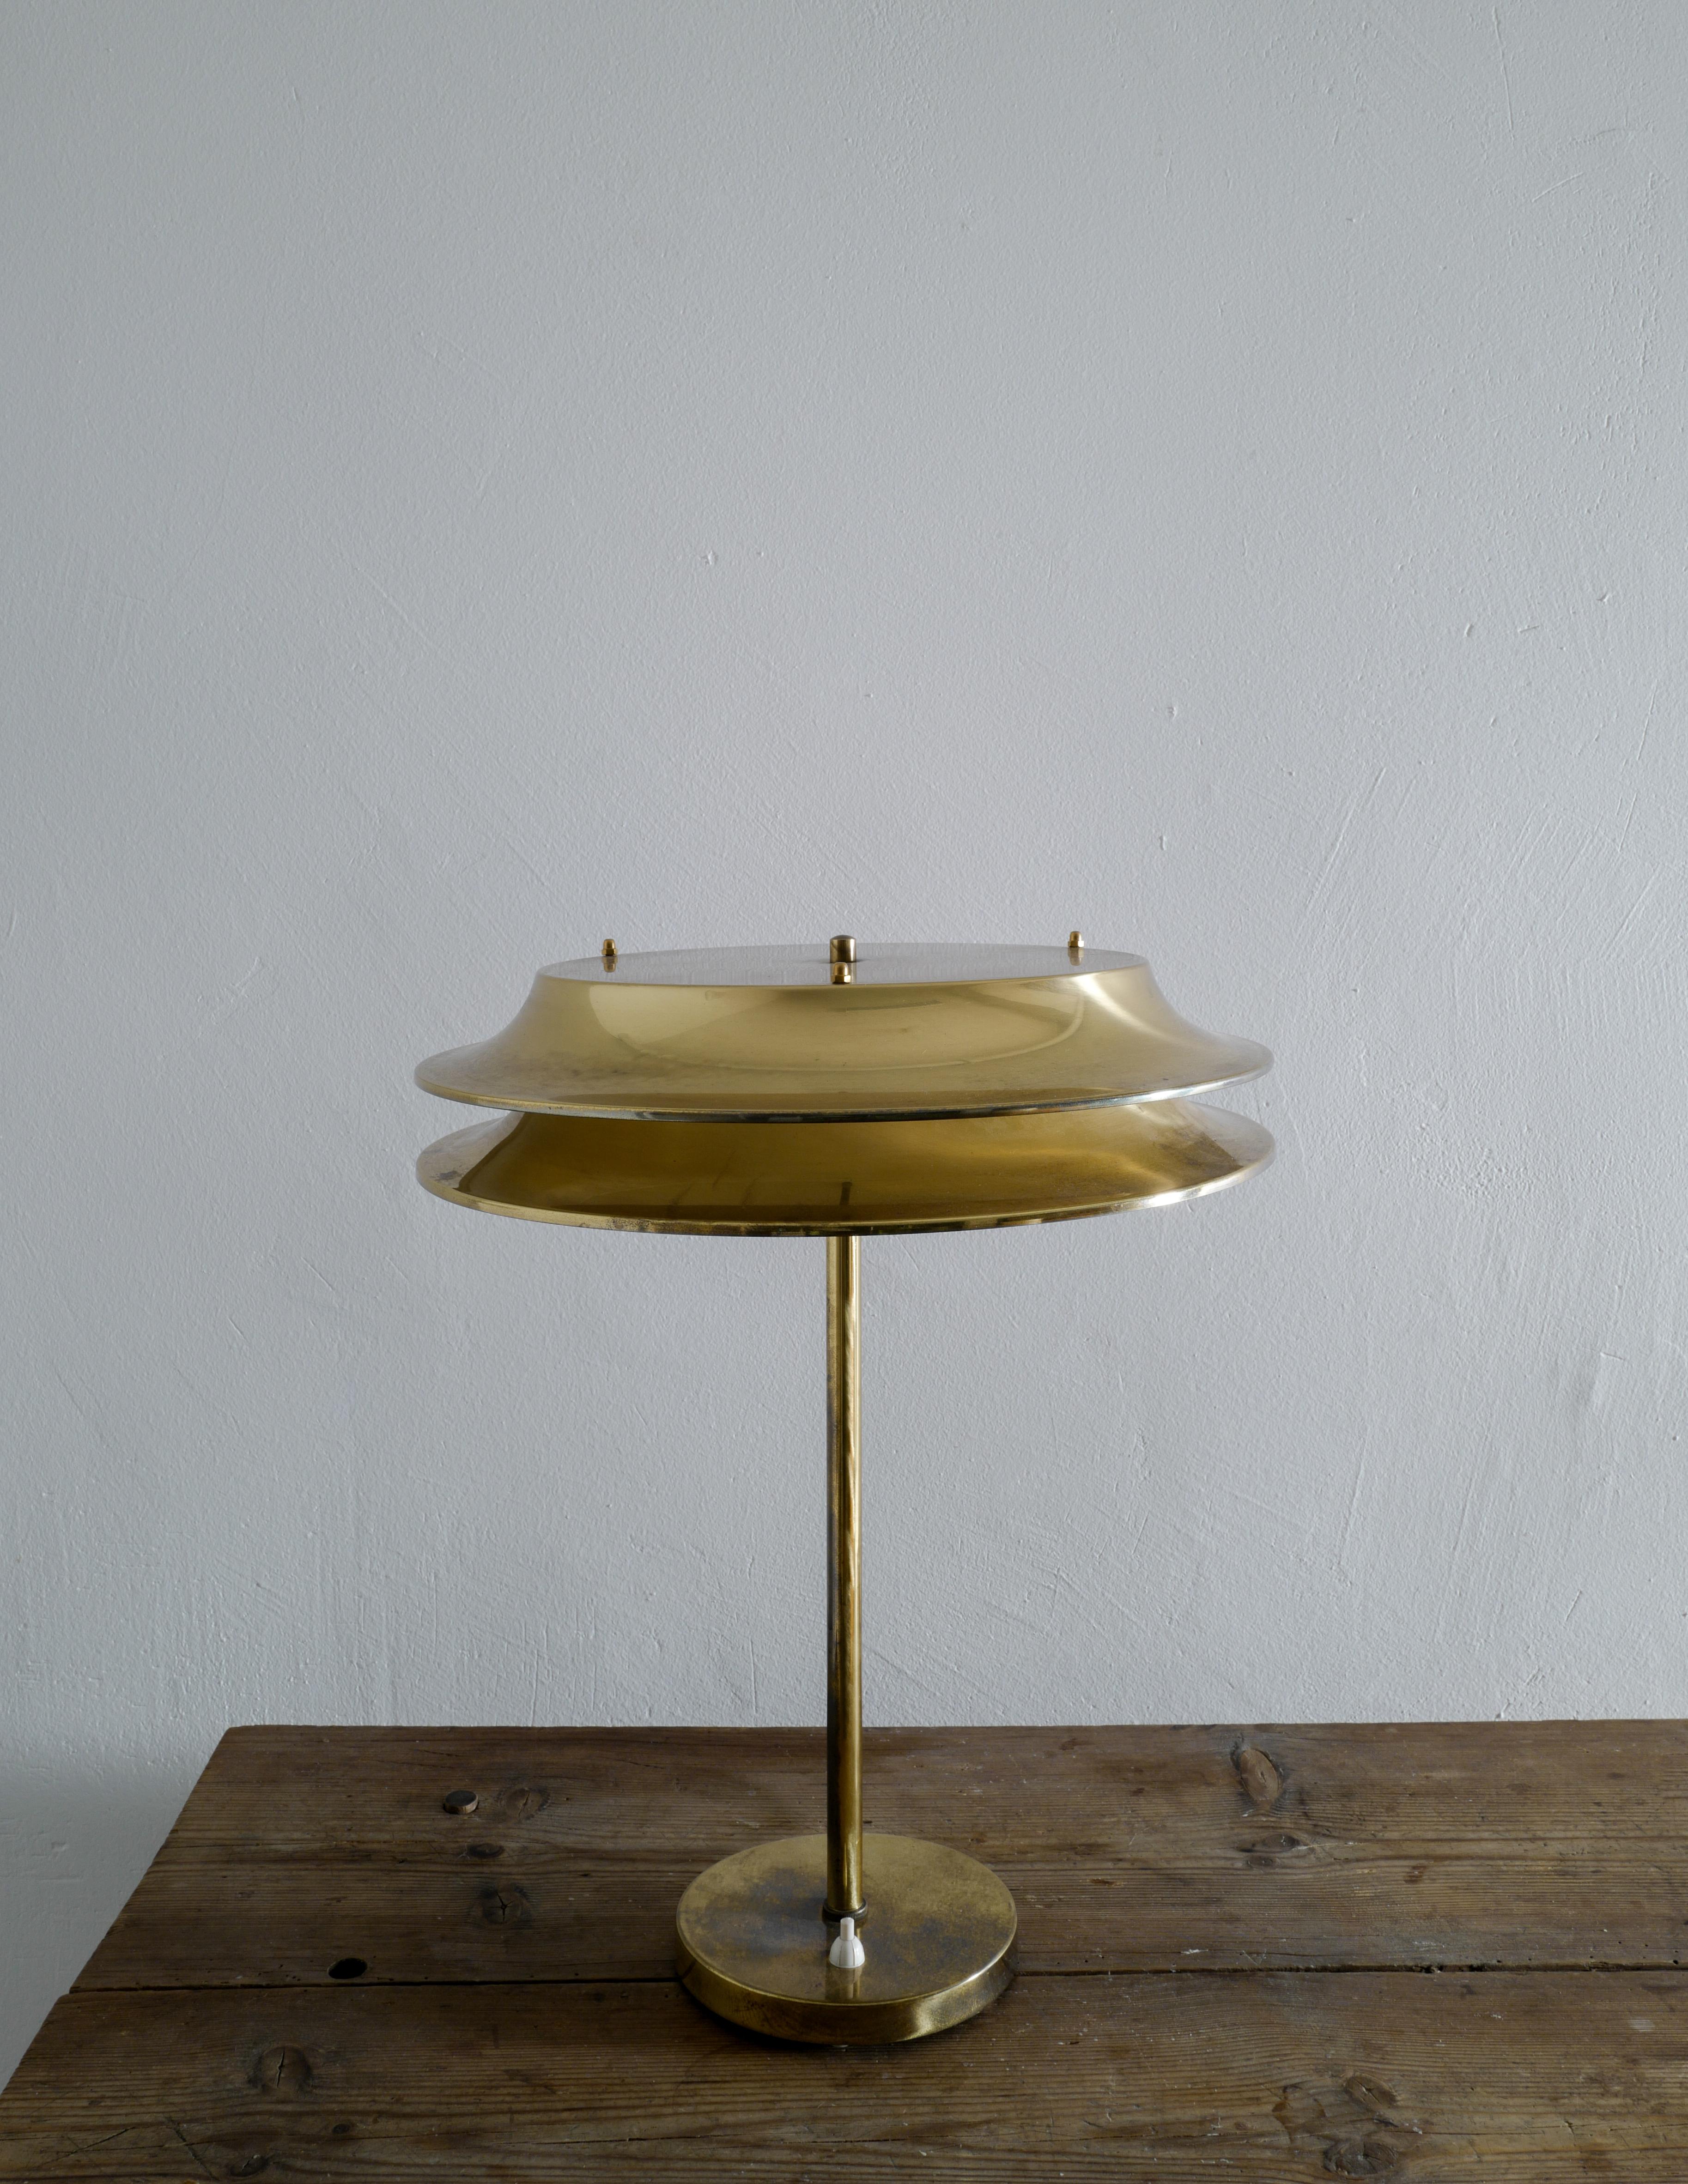 Scandinavian Modern Kari Ruokonen Table Lamp in Brass 1960s for Lynx, Finland